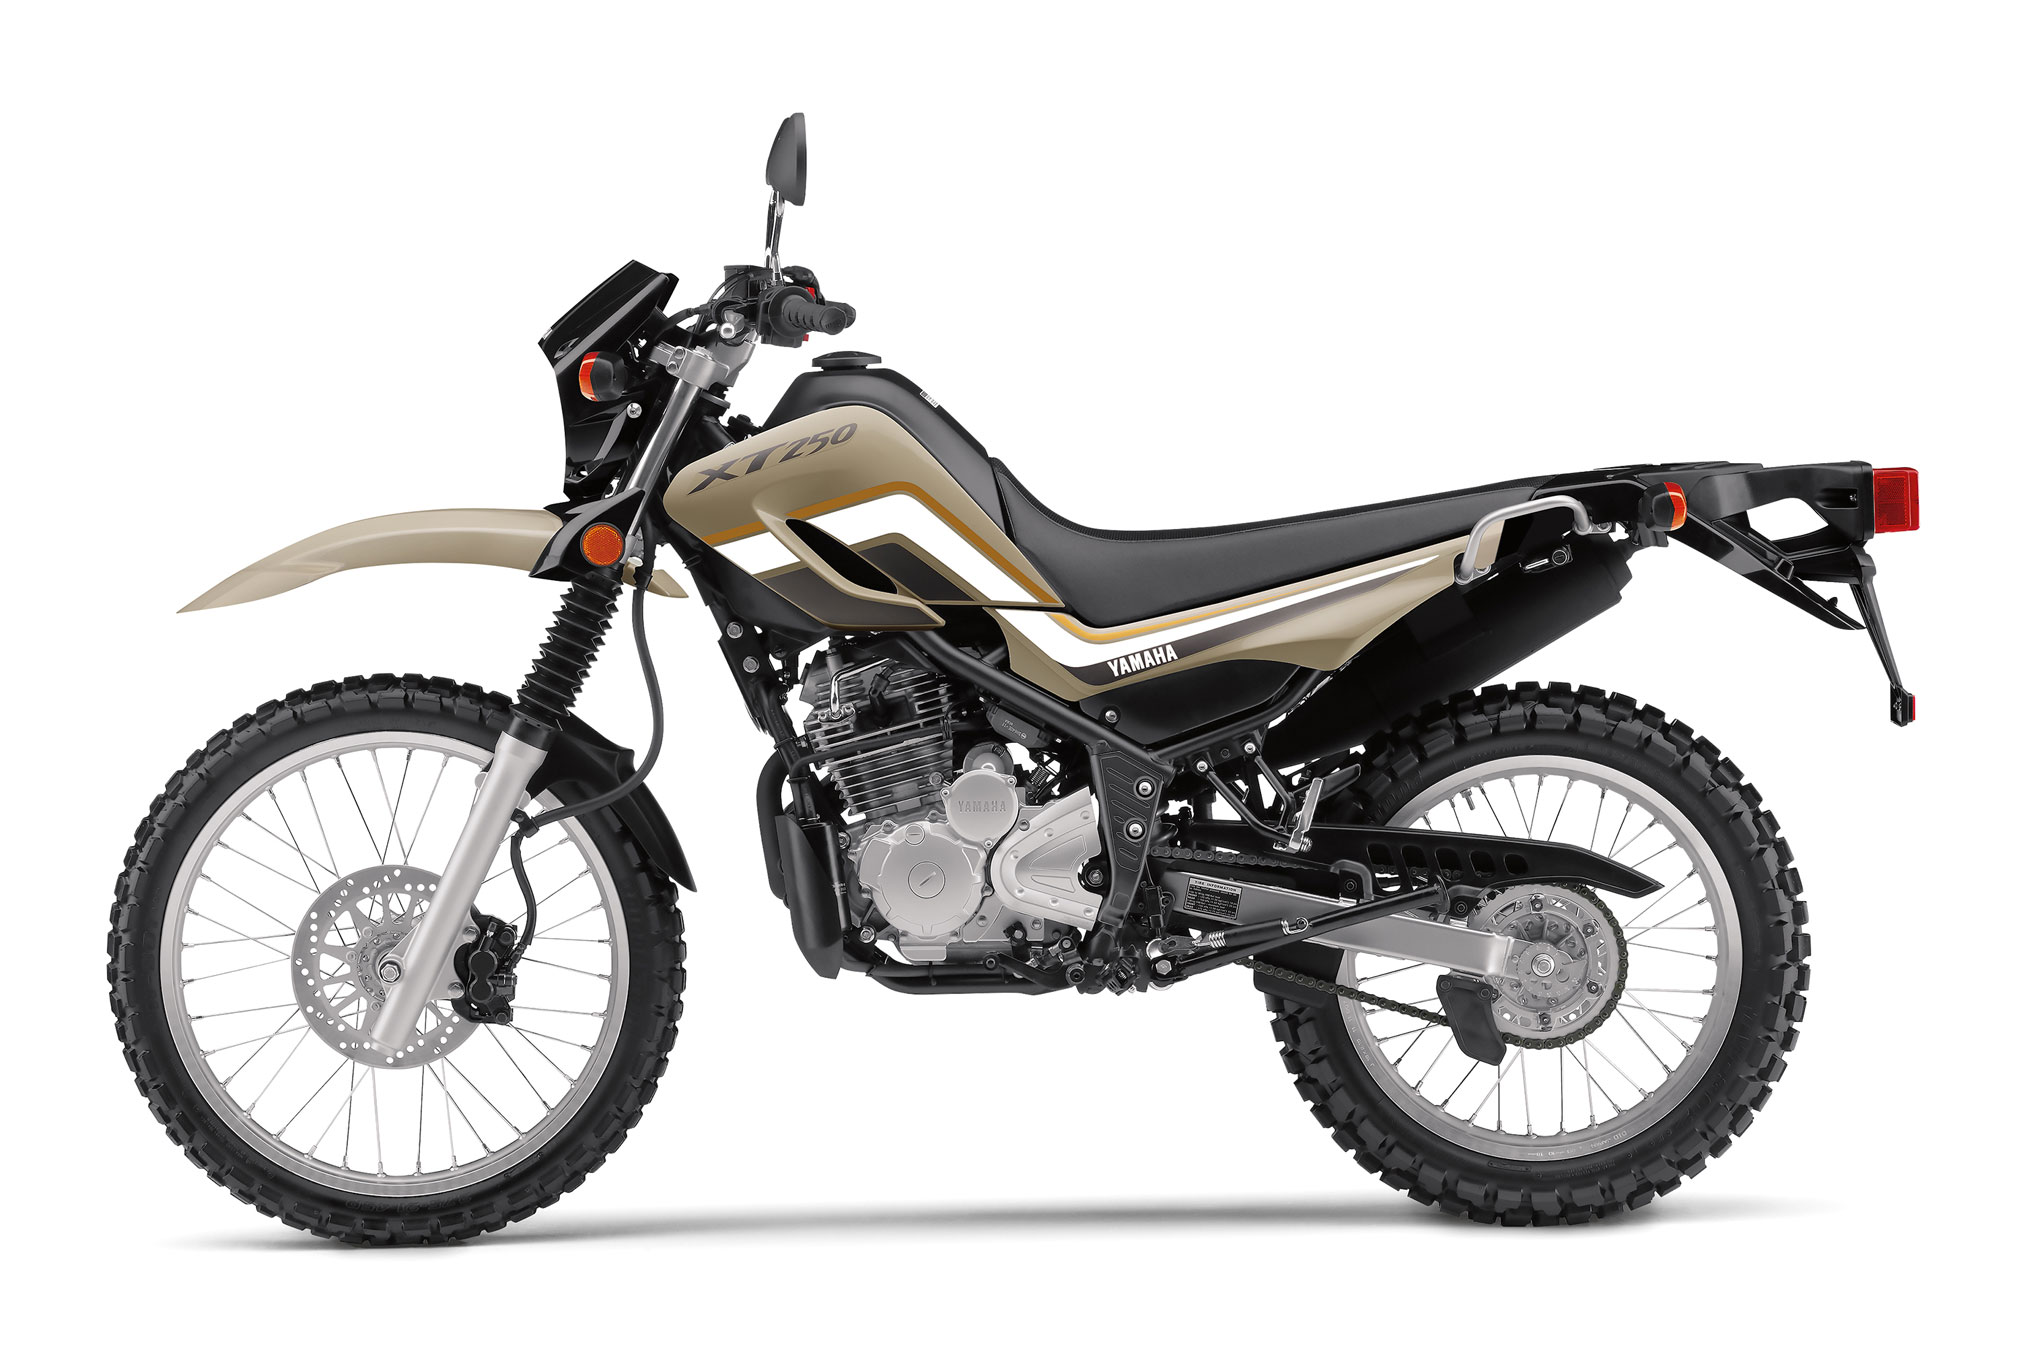 2019 Yamaha XT250 Guide • Total Motorcycle